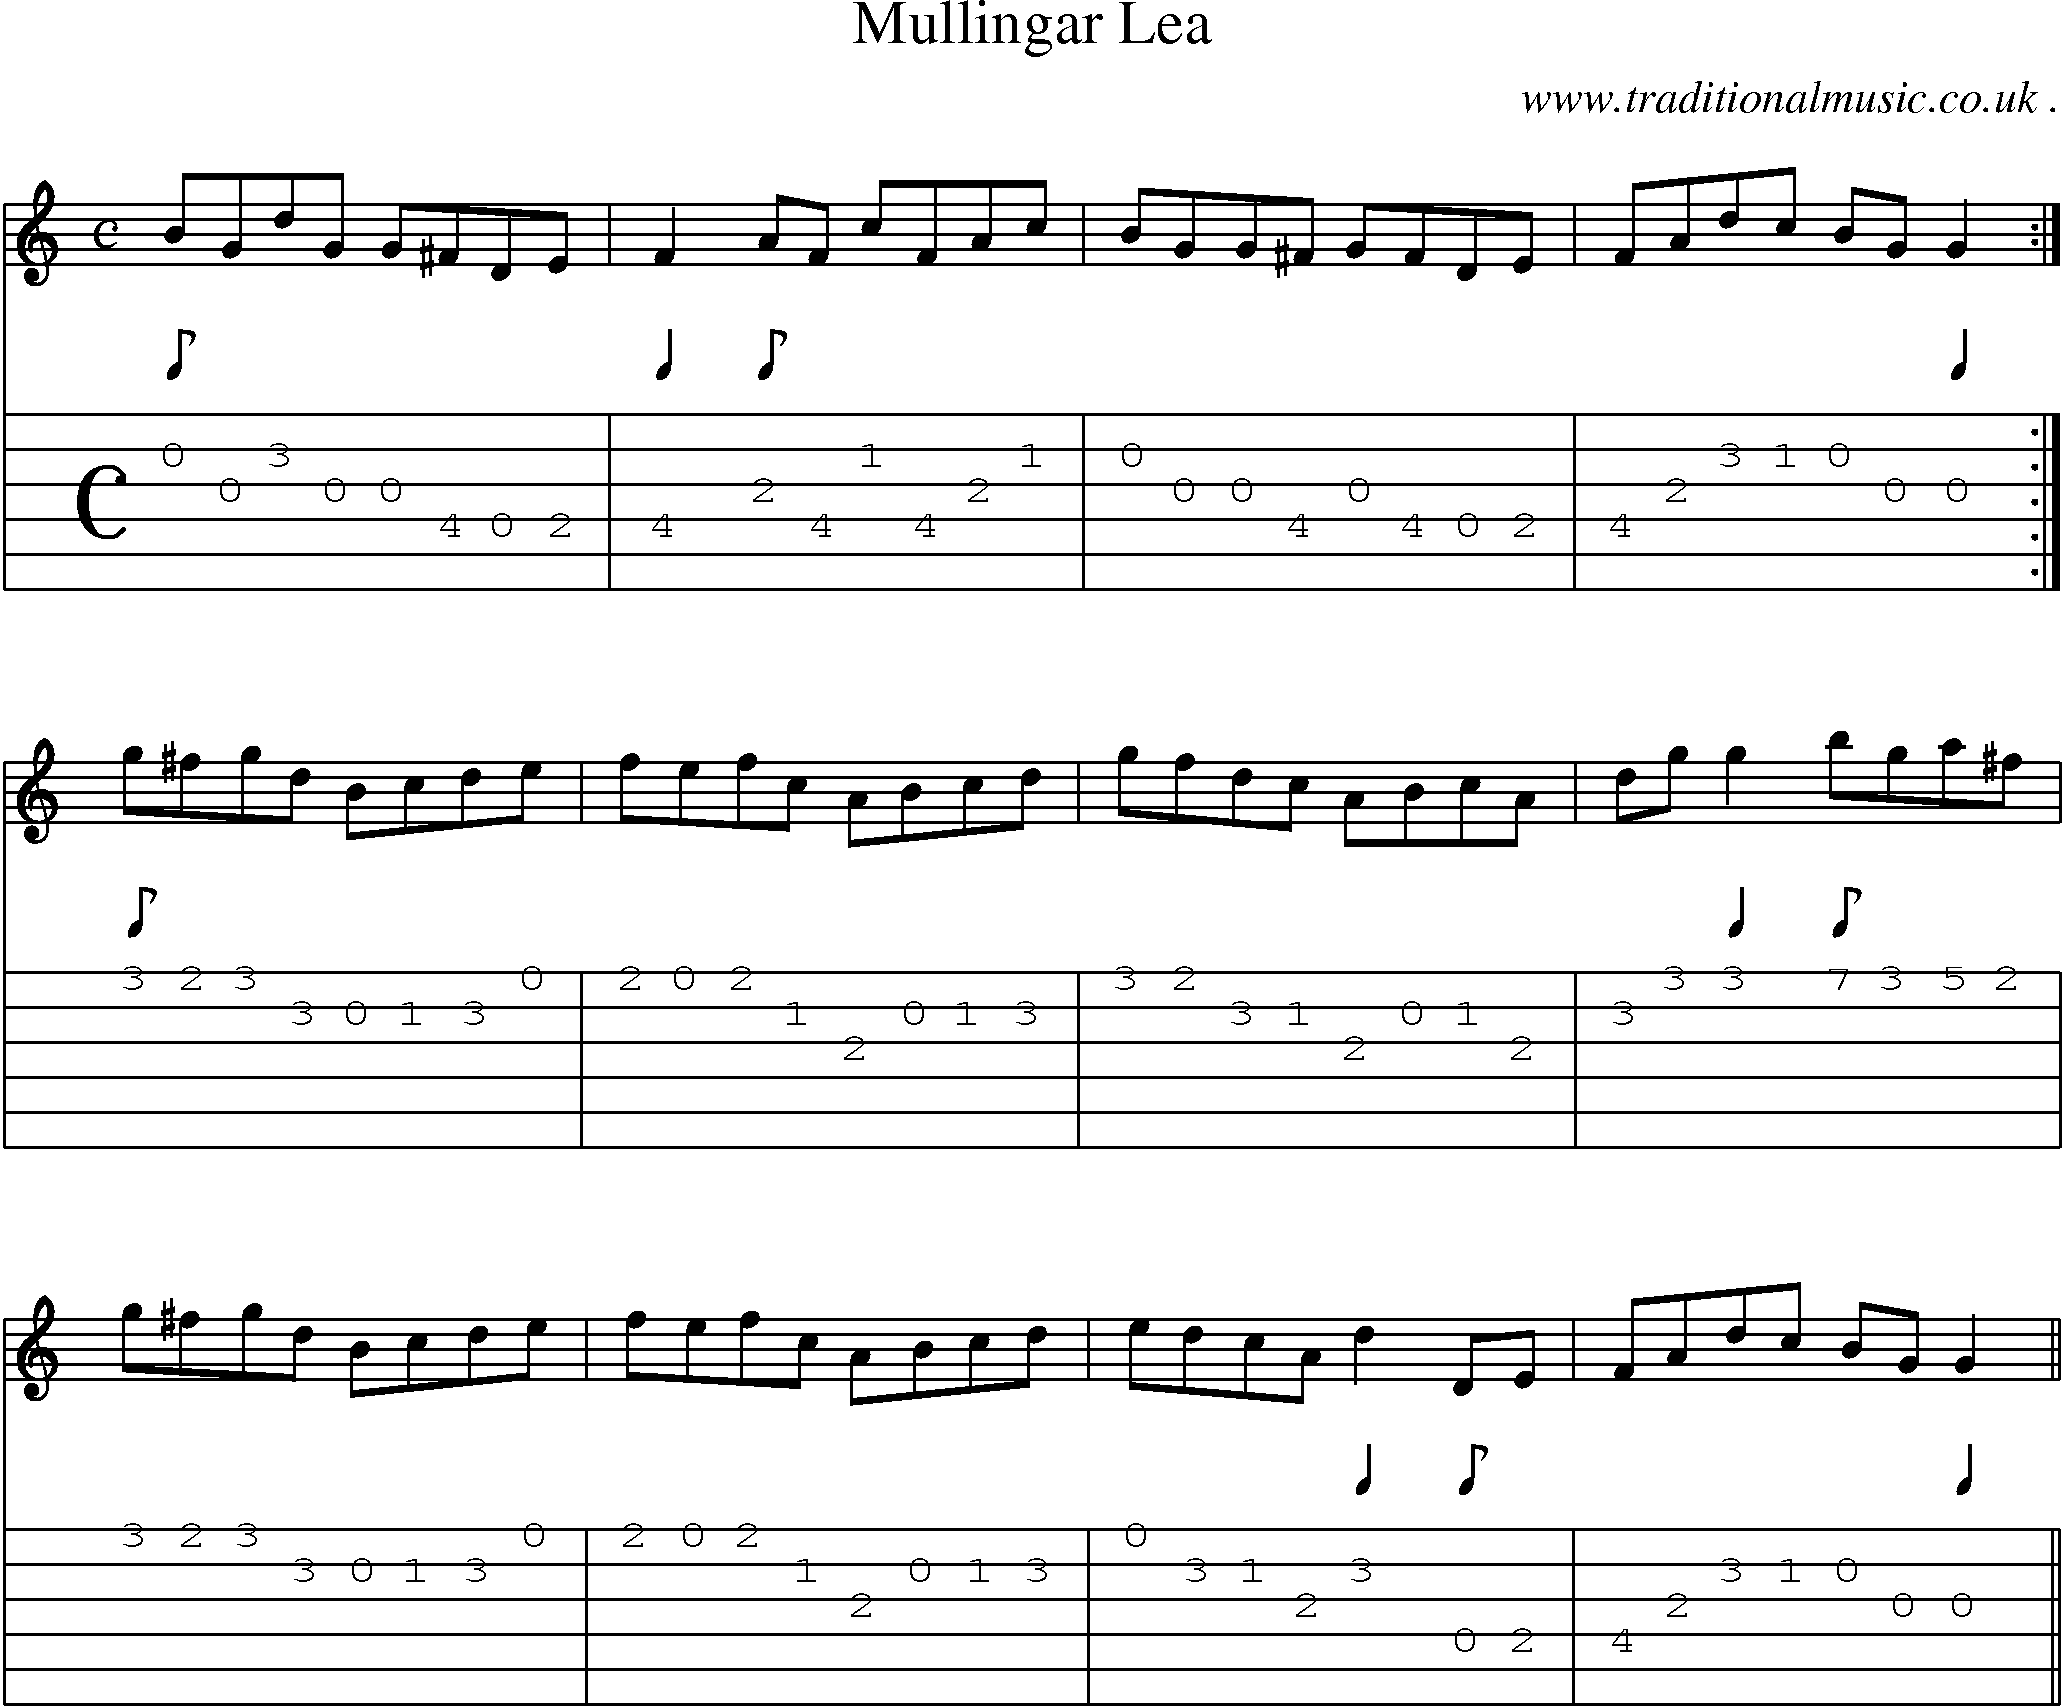 Sheet-Music and Guitar Tabs for Mullingar Lea